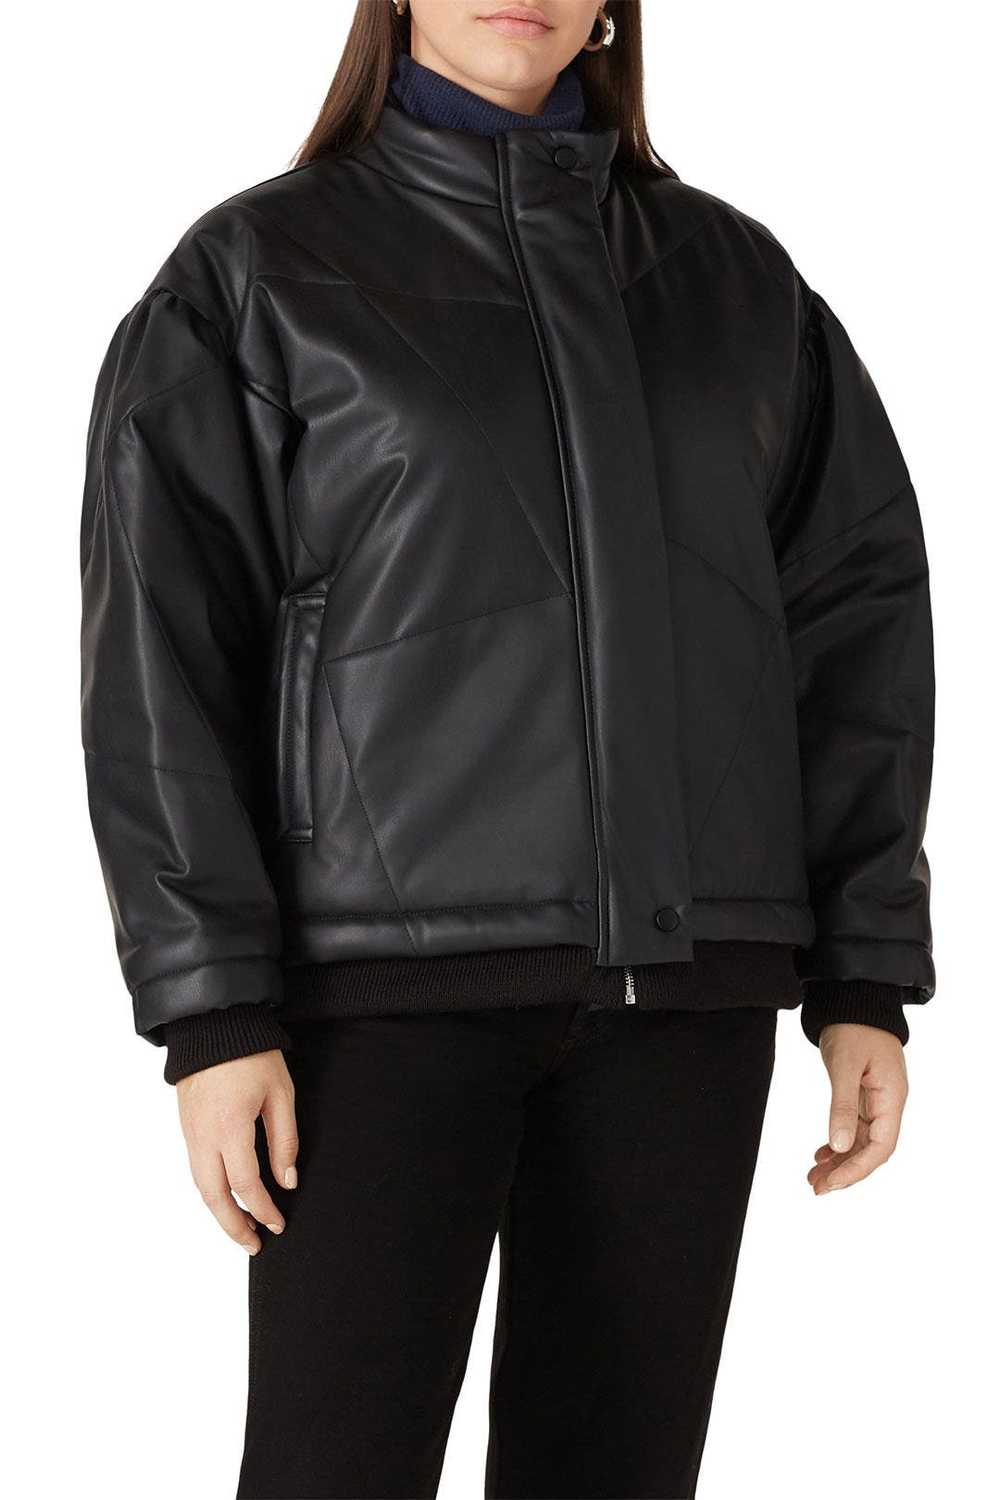 Sea New York Black Faux Leather Puff Jacket - image 4